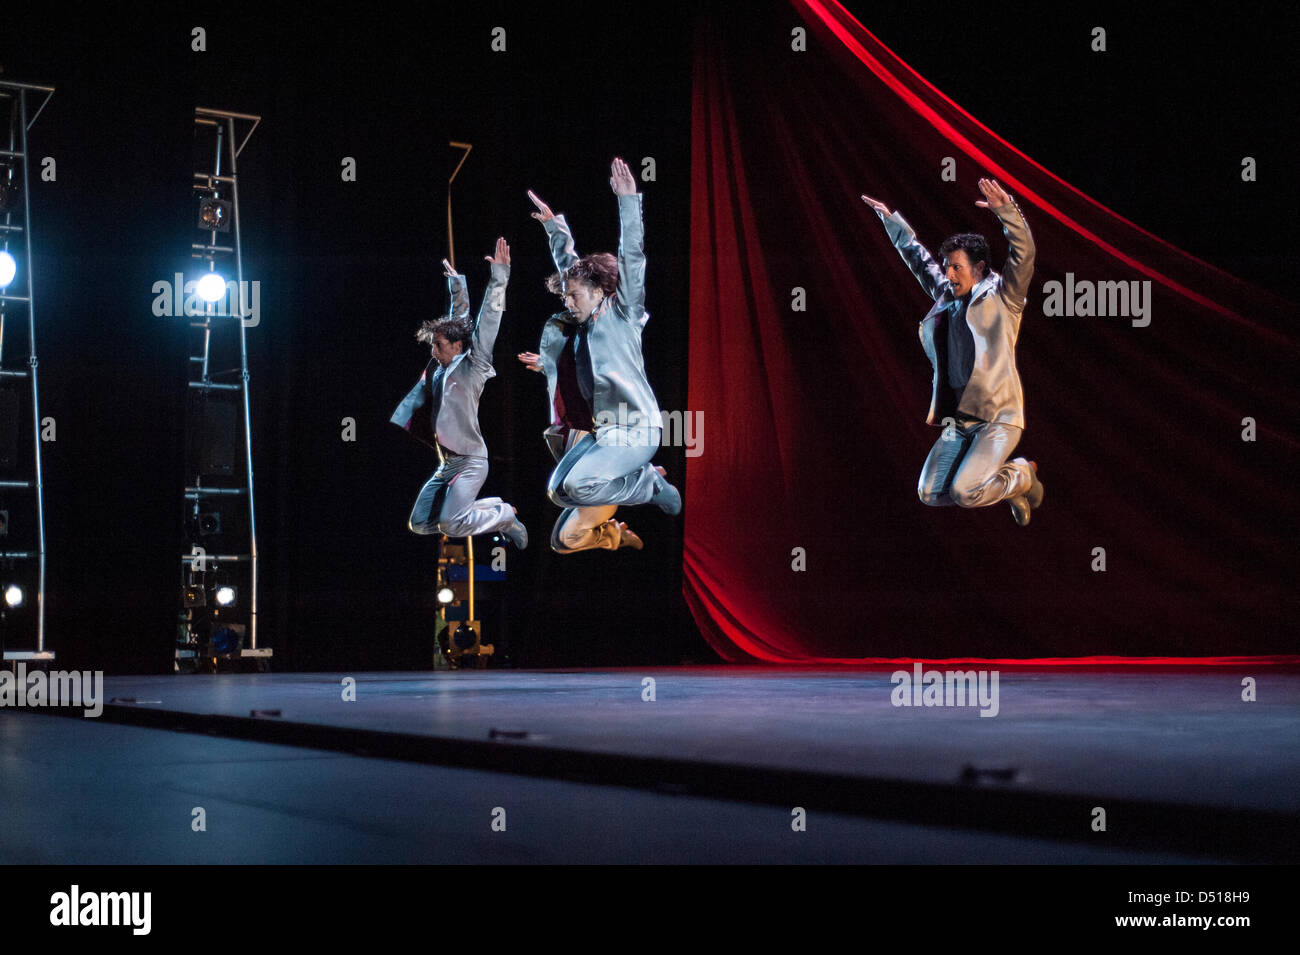 London, UK. 21st March 2013. Bulerias danced as part of Metaforo, Ballet Flamenco de Andalucia, Sadler's Wells Flamenco Festival. London 2013. UK. Credit: CaroleEdrich/Alamy Live News Stock Photo